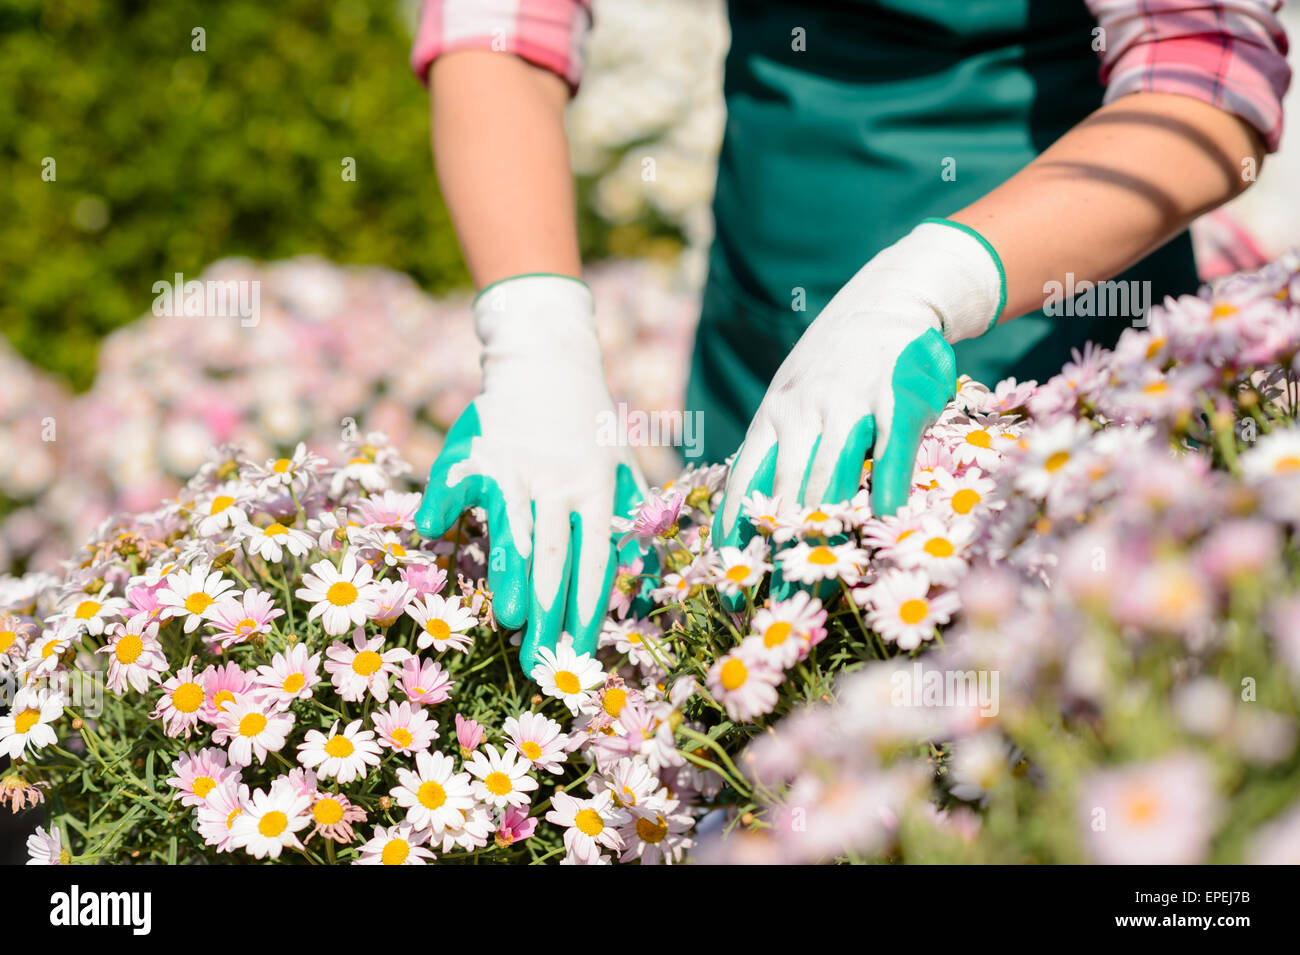 Hände in Gartenhandschuhe berühren Daisy Blumenbeet Stockfoto